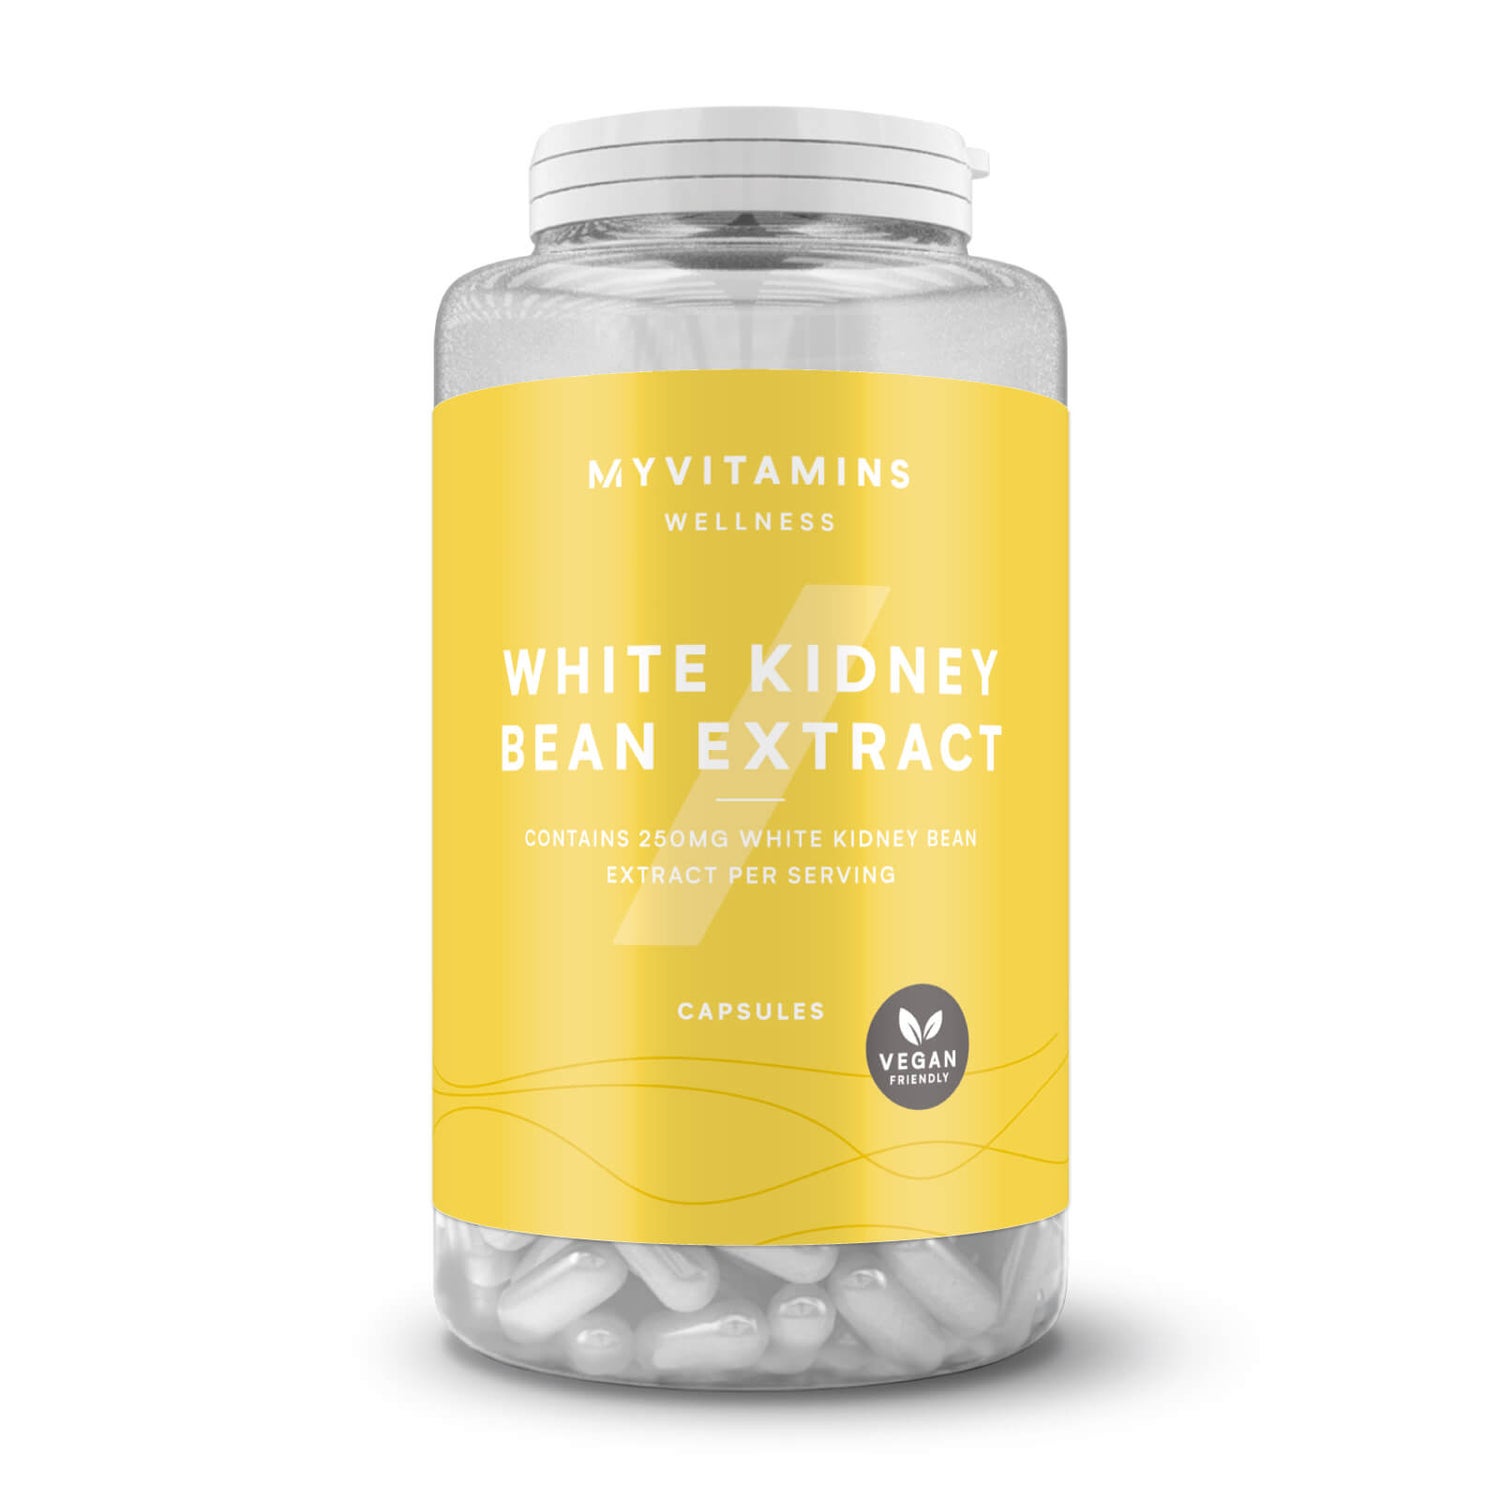 Myvitamins White Kidney Bean Extract